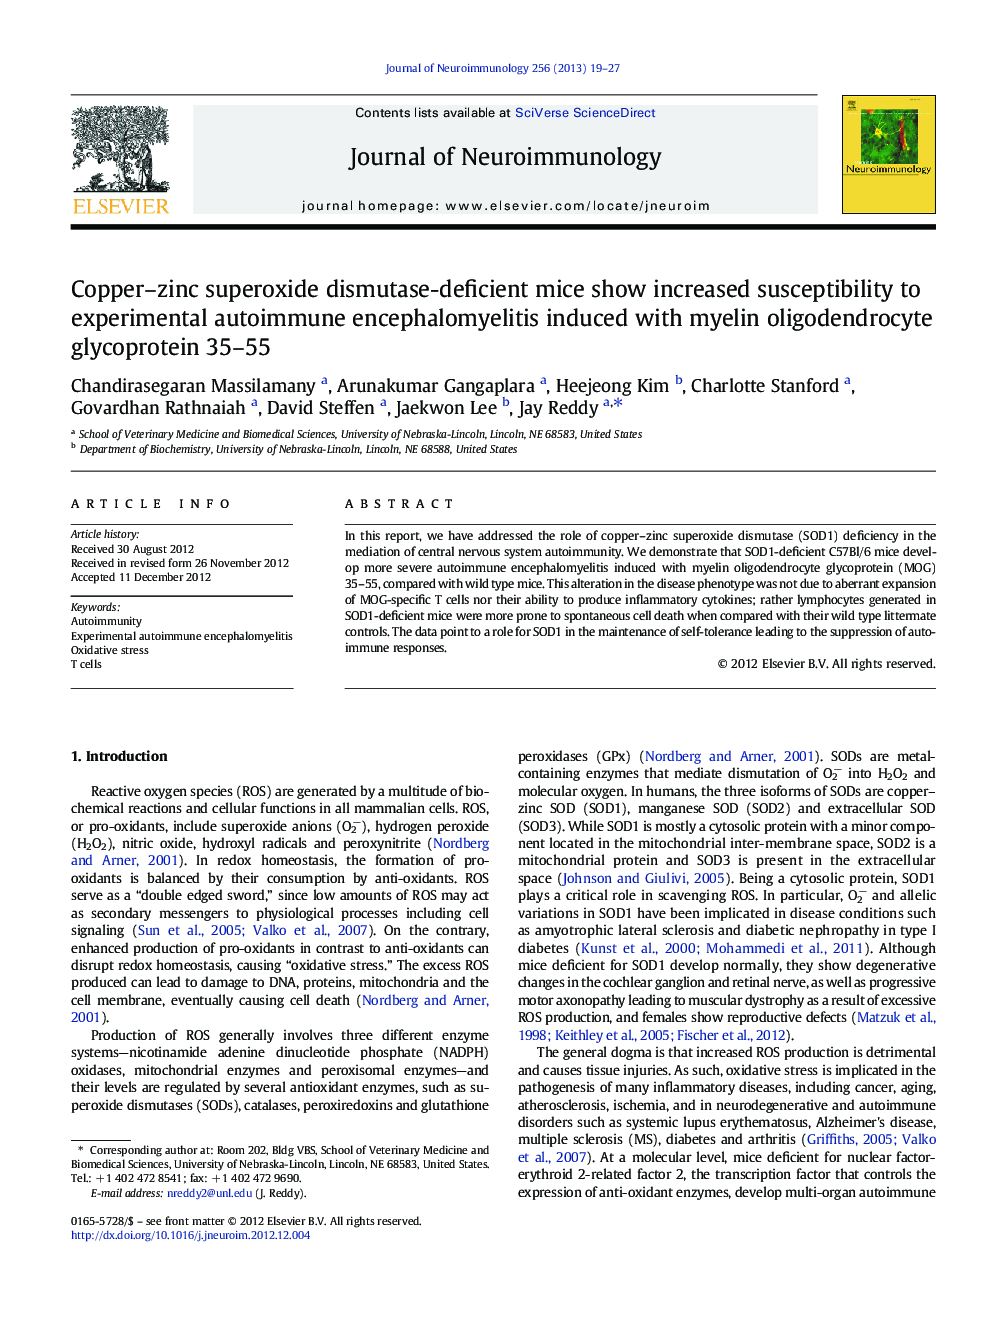 Copper–zinc superoxide dismutase-deficient mice show increased susceptibility to experimental autoimmune encephalomyelitis induced with myelin oligodendrocyte glycoprotein 35–55